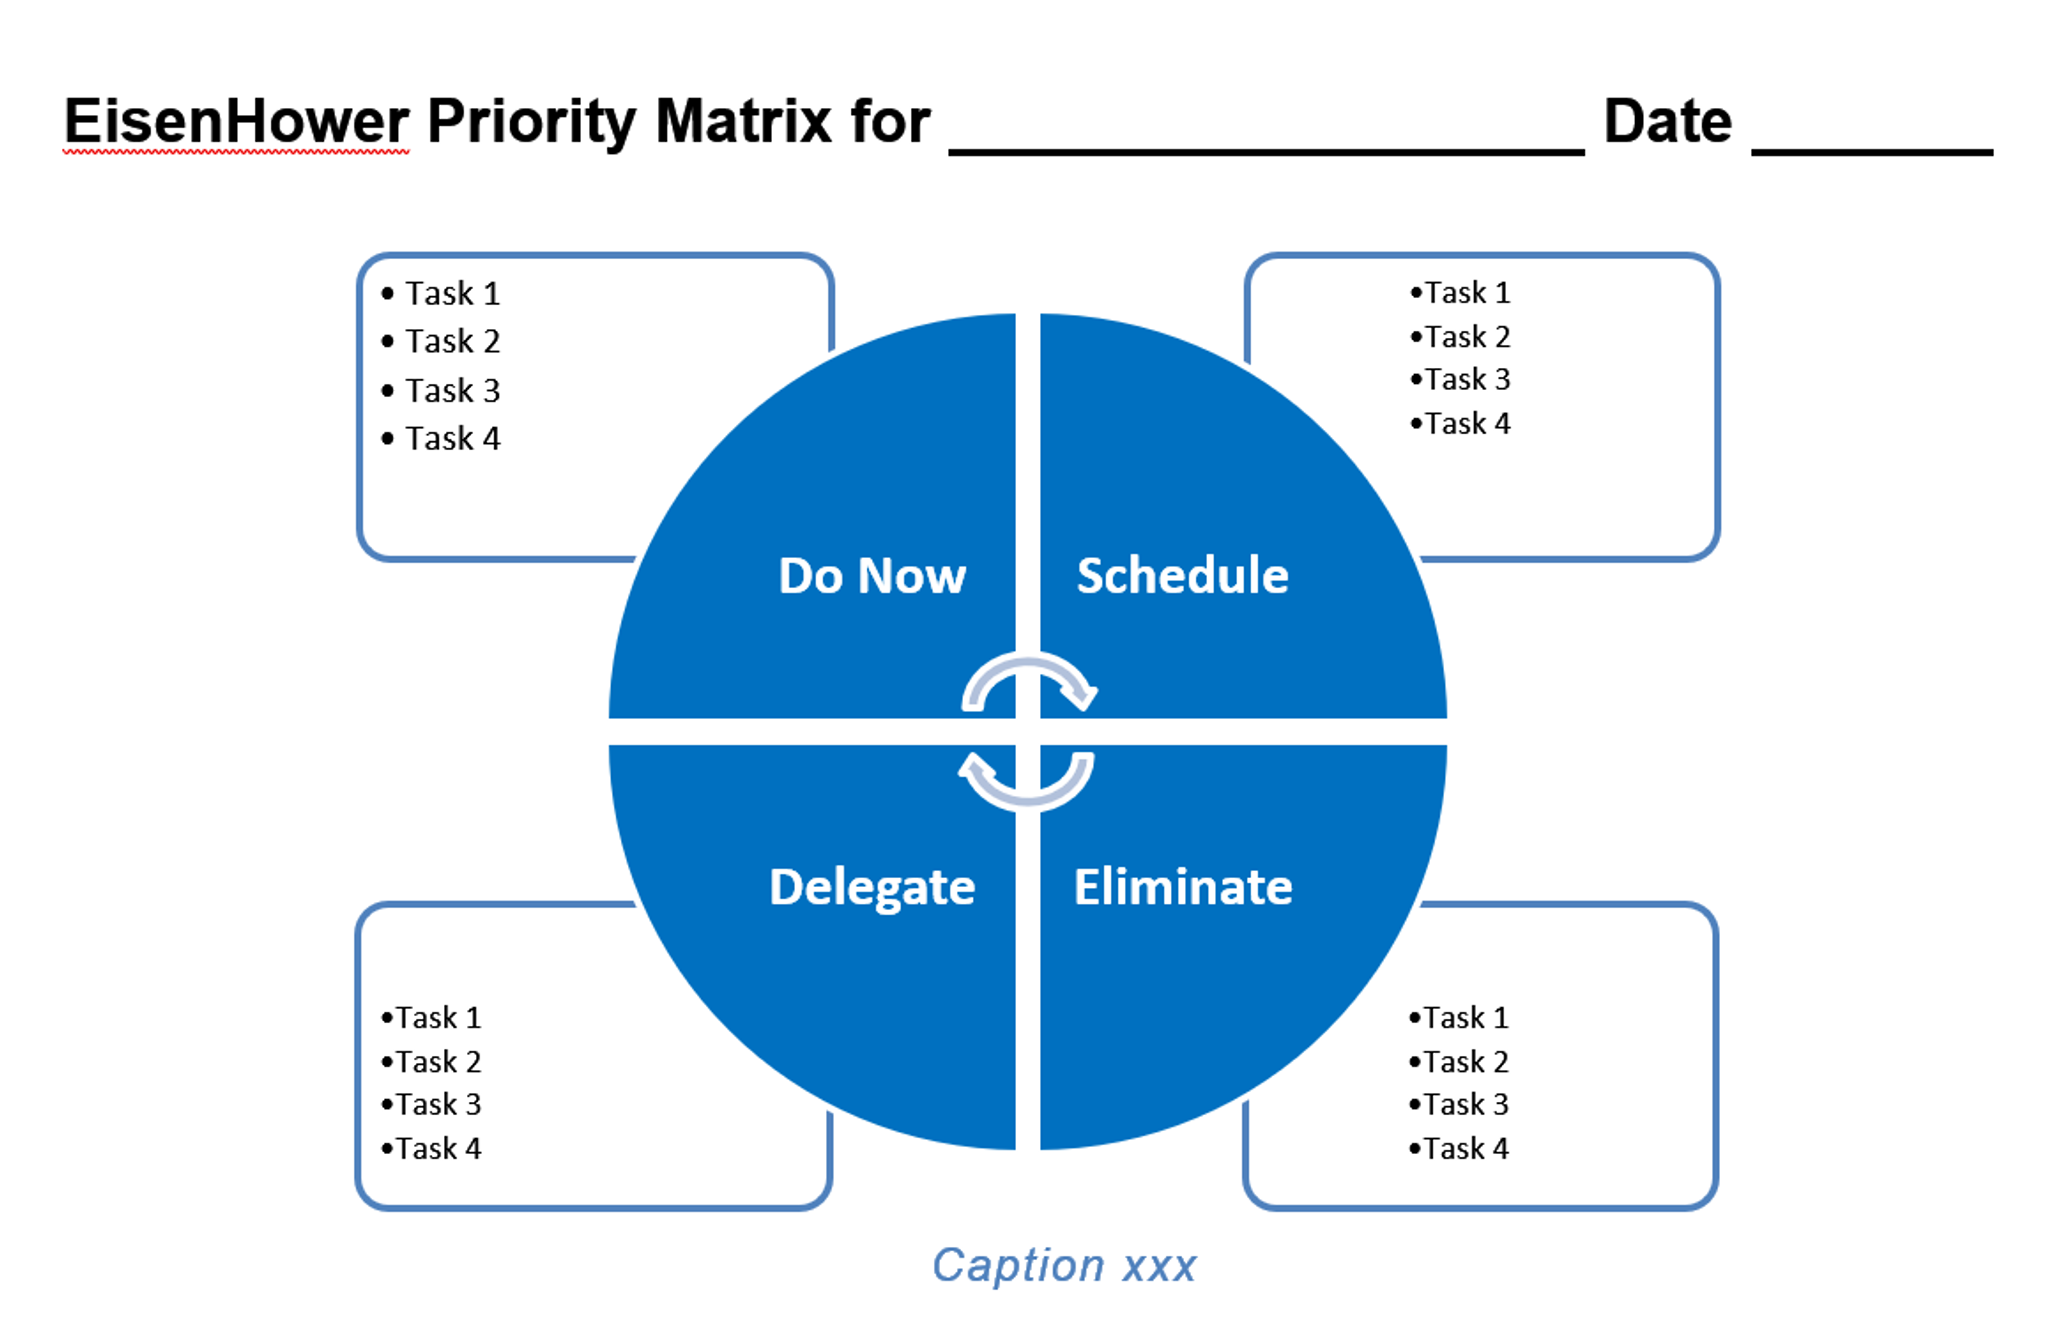 priority matrix template word